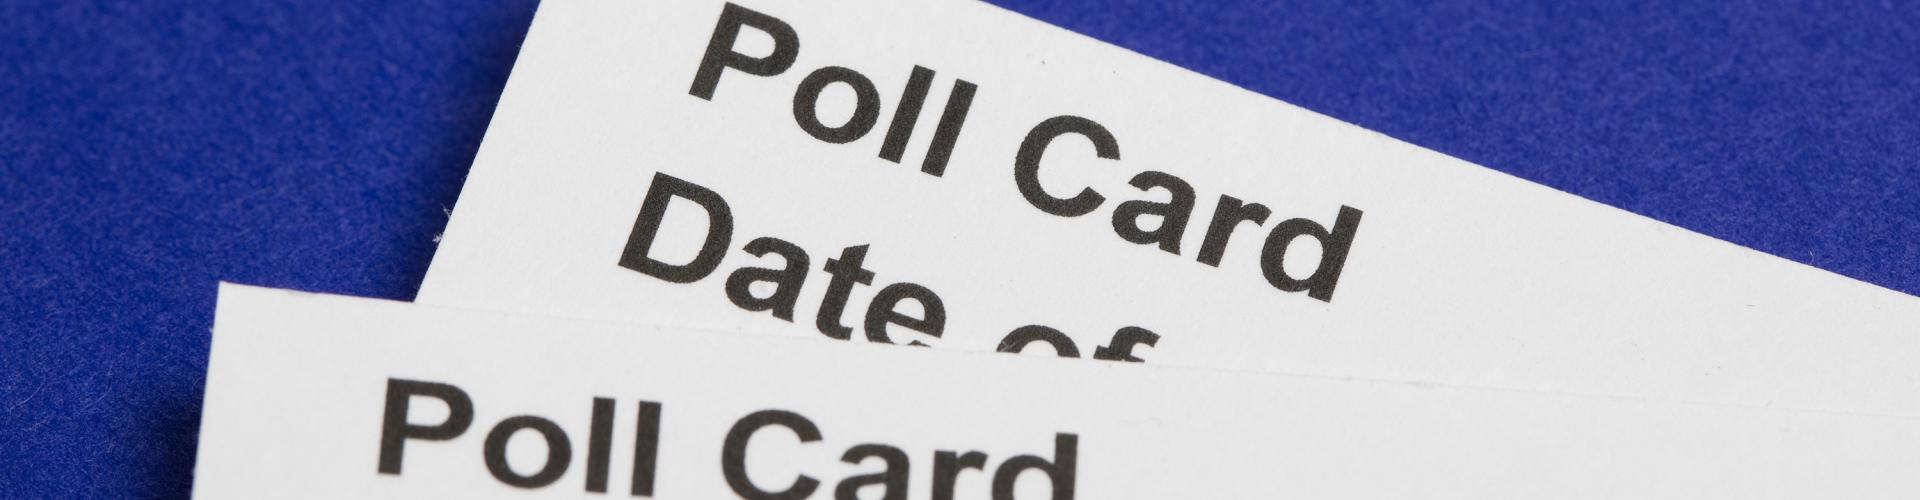 Poll card